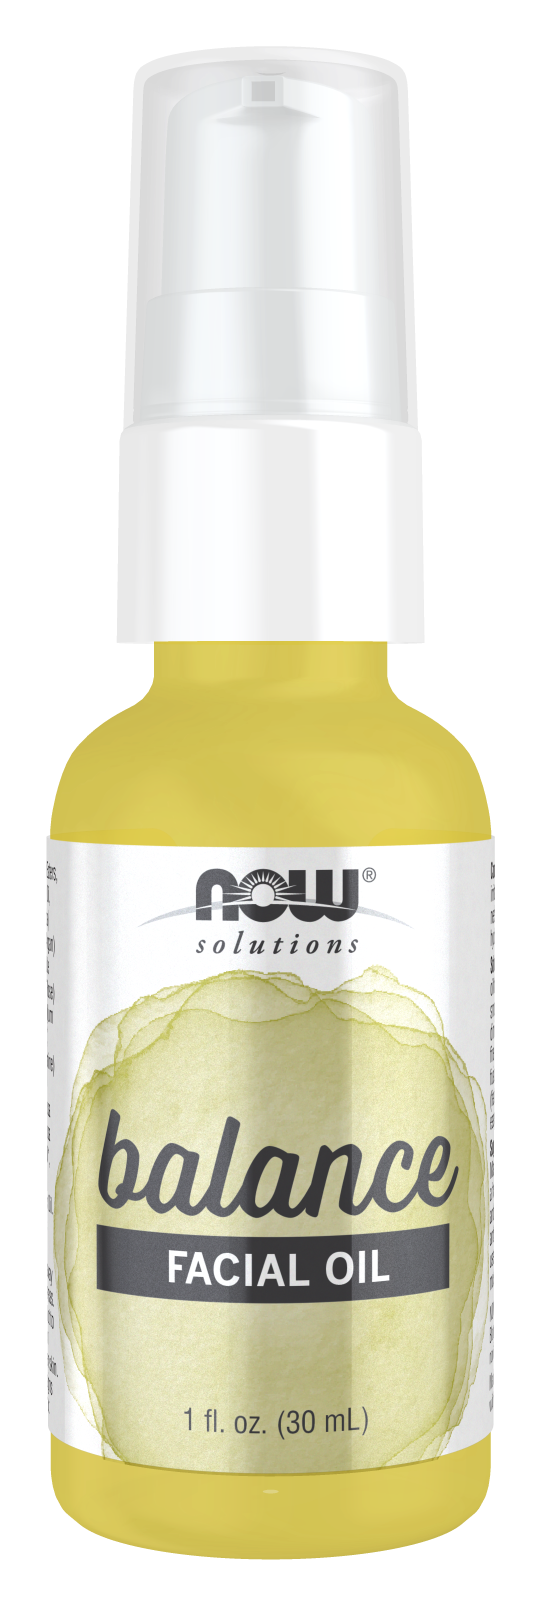 Now Solutions Pure Jasmine Oil 30ml - عناية الكون cooncare